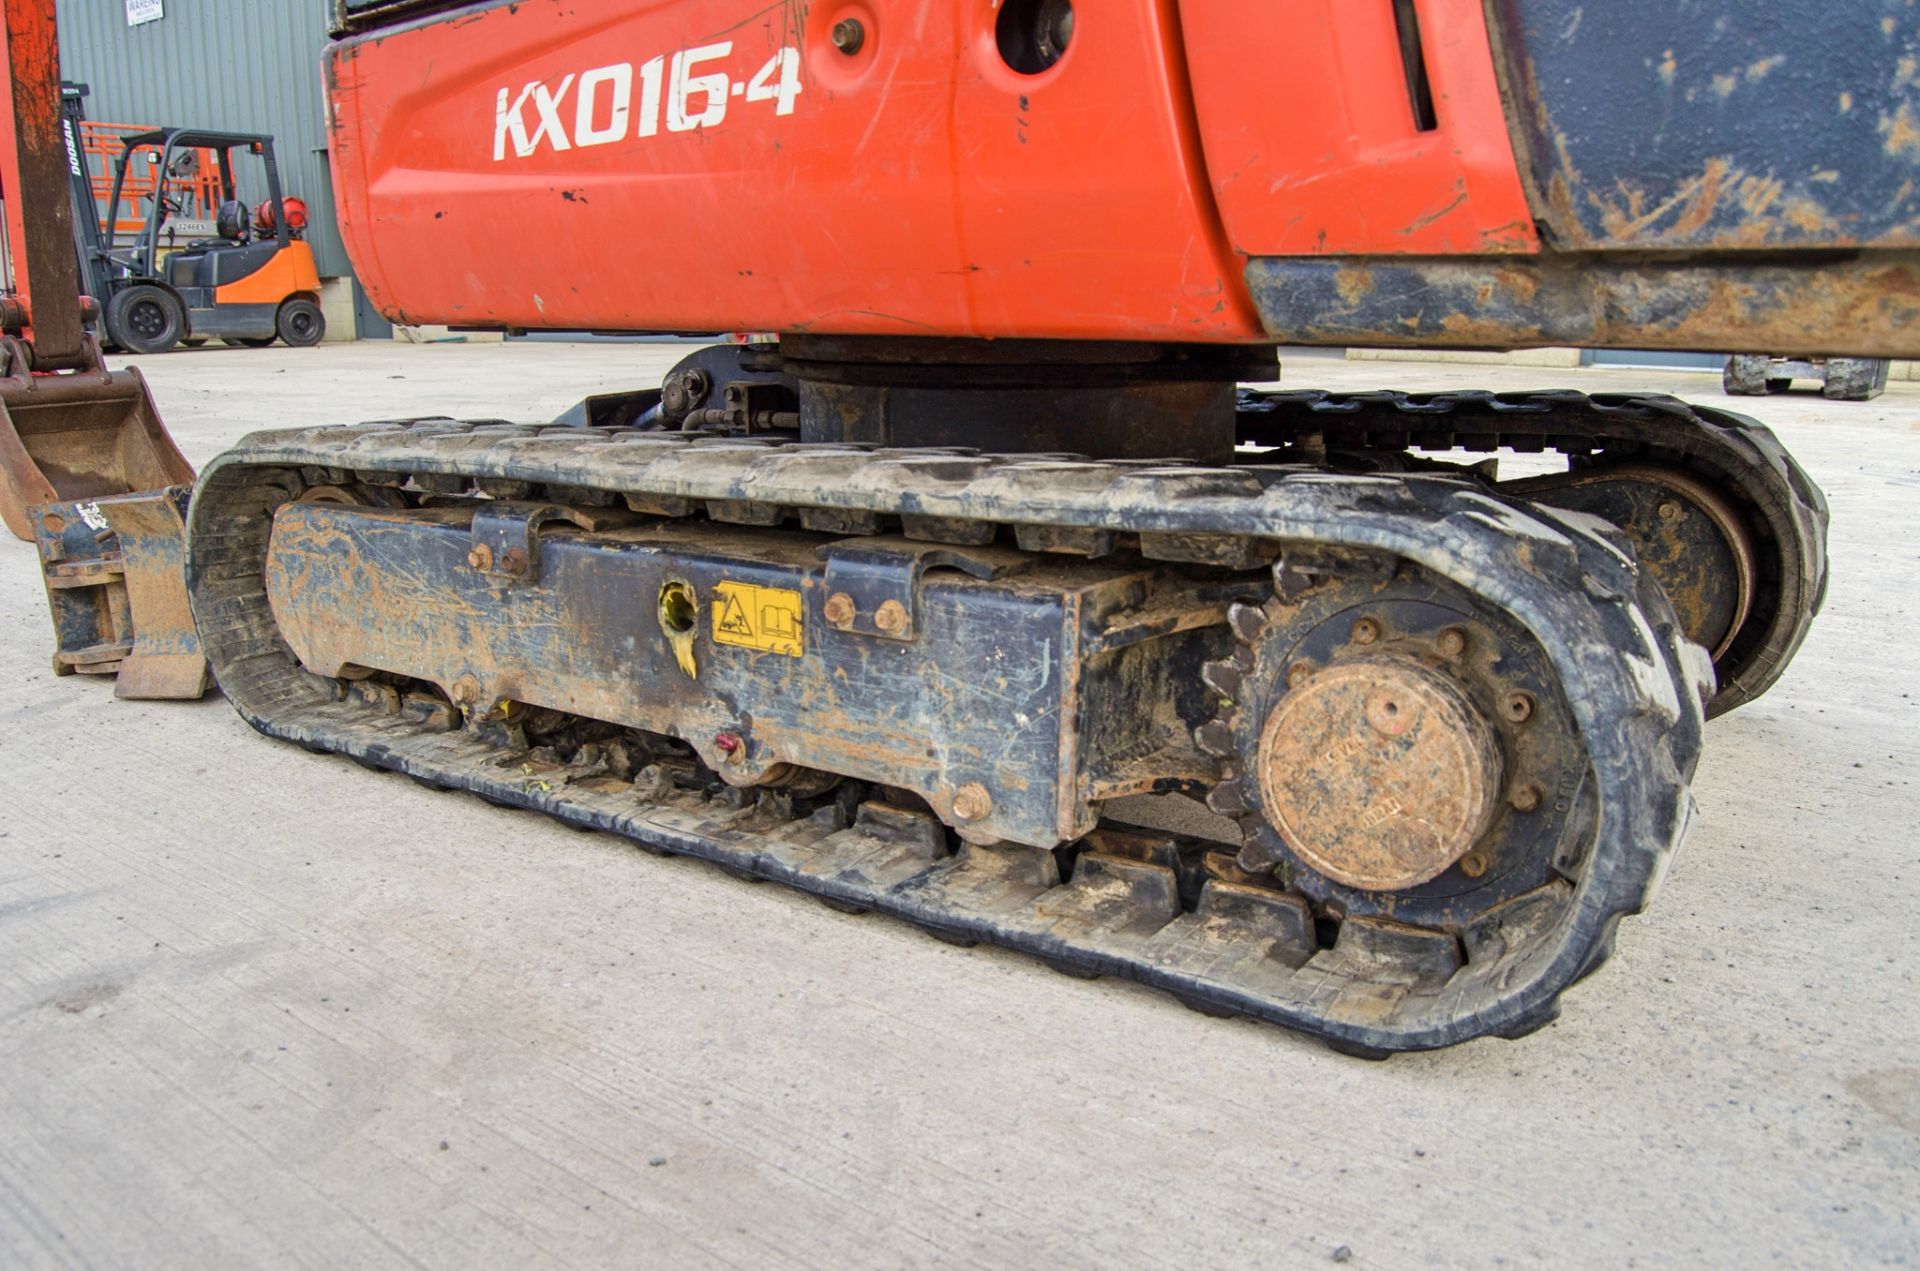 Kubota KX016-4 1.5 tonne rubber tracked mini excavator Year: 2017 S/N: 61111 Recorded Hours: 2408 - Image 10 of 27